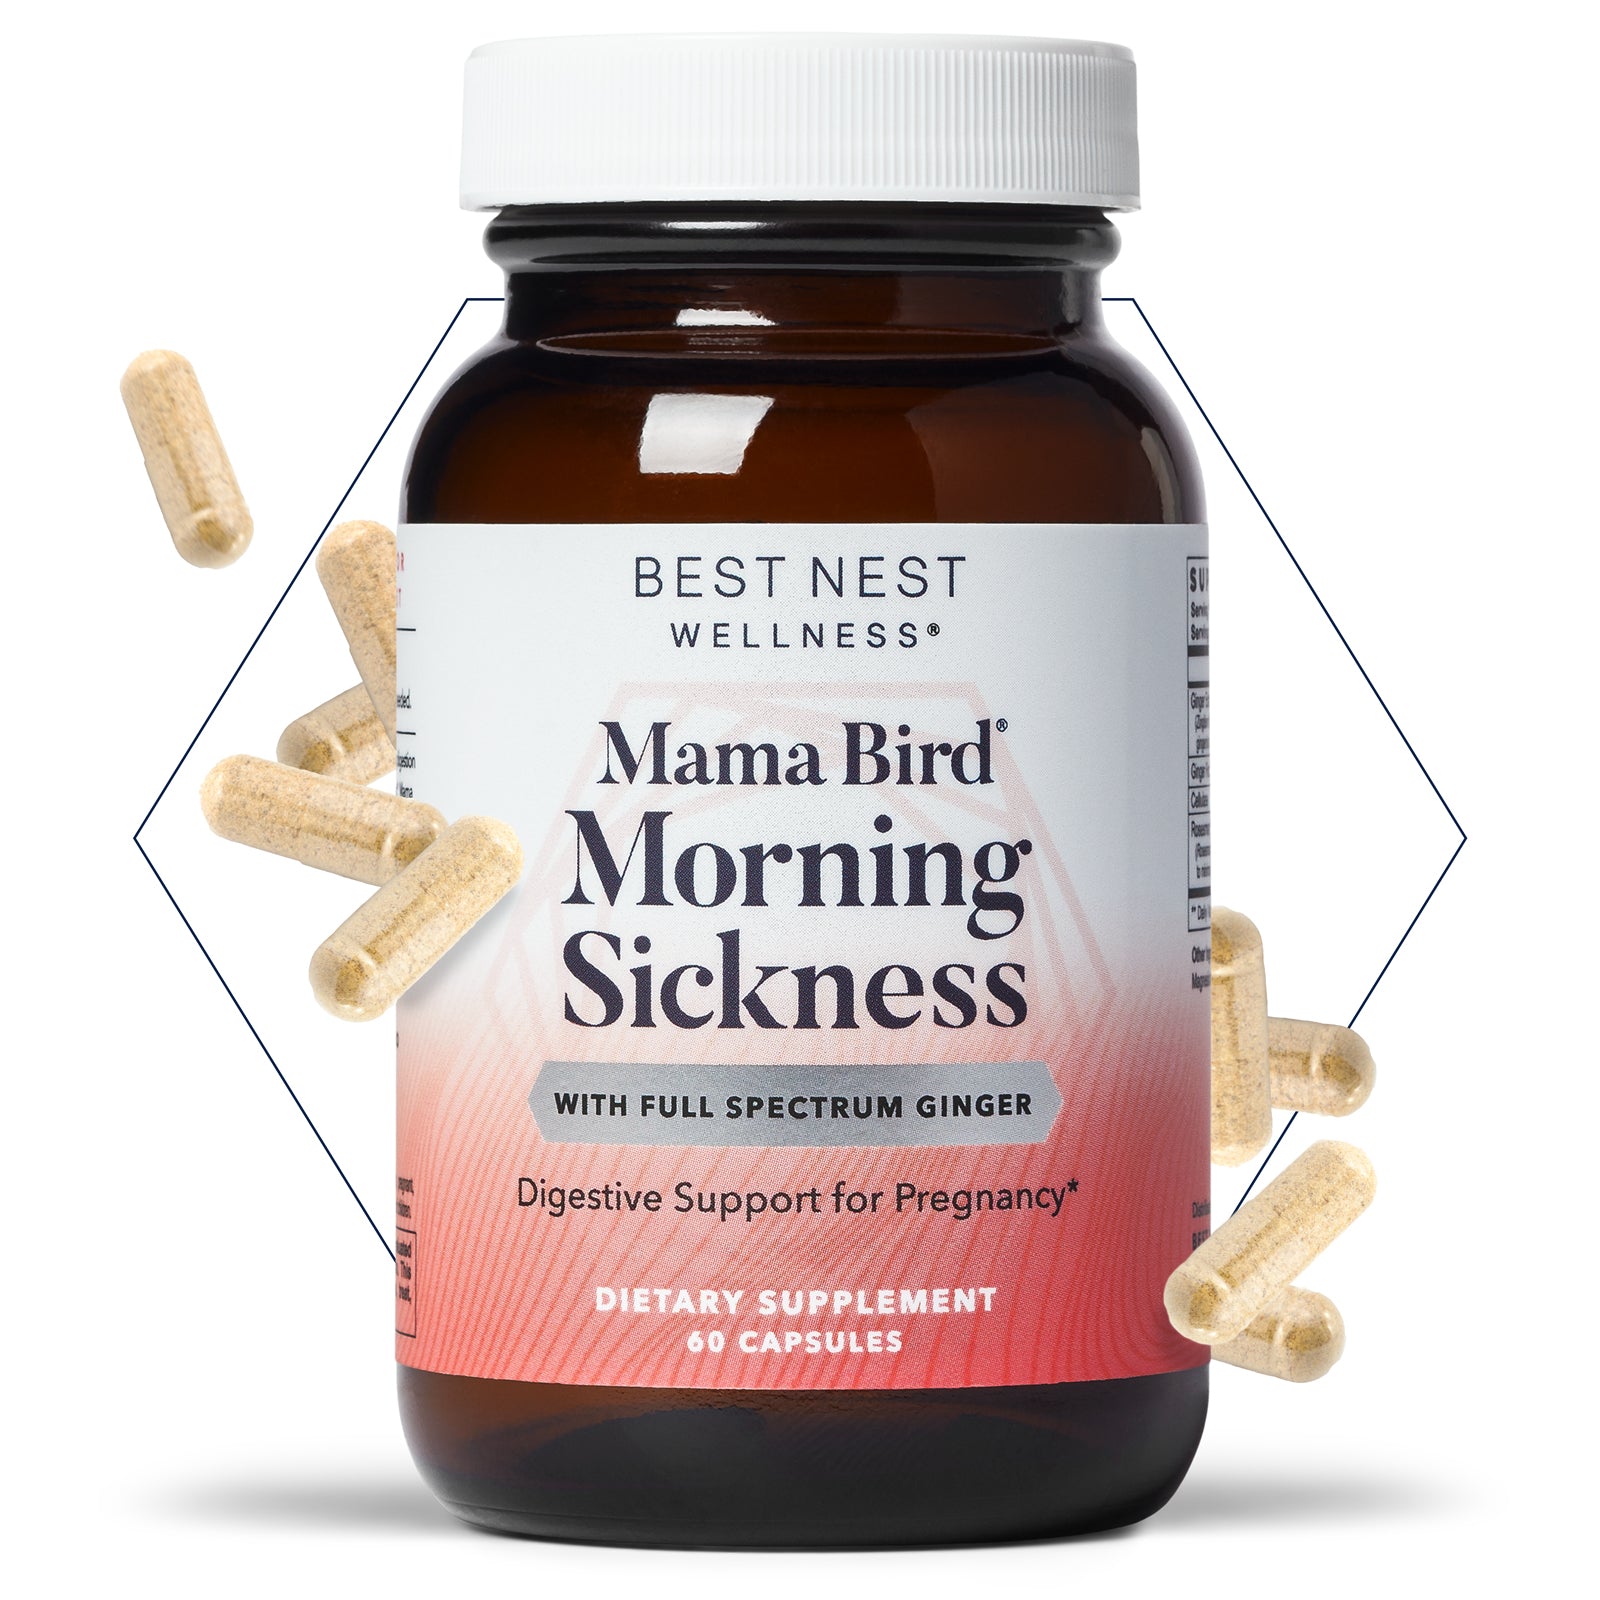 Mama Bird Morning Sickness Relief